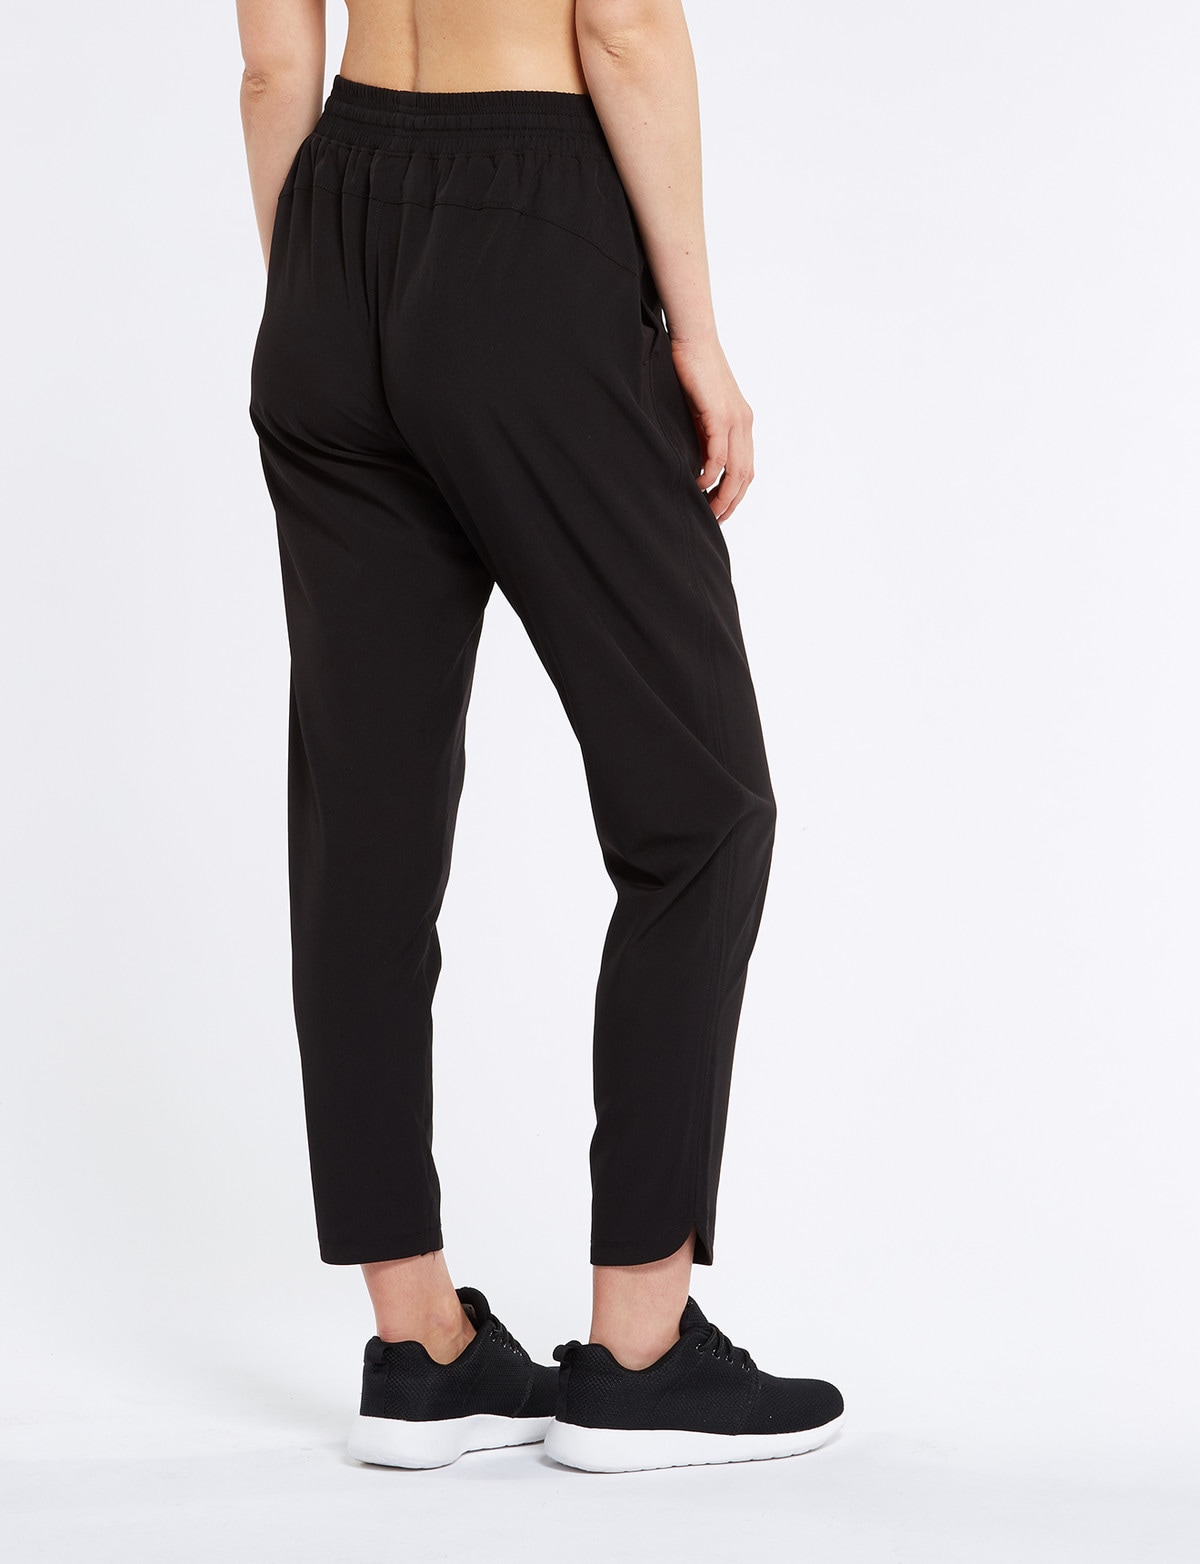 Superfit Soft Stretch Pant, Black - Activewear